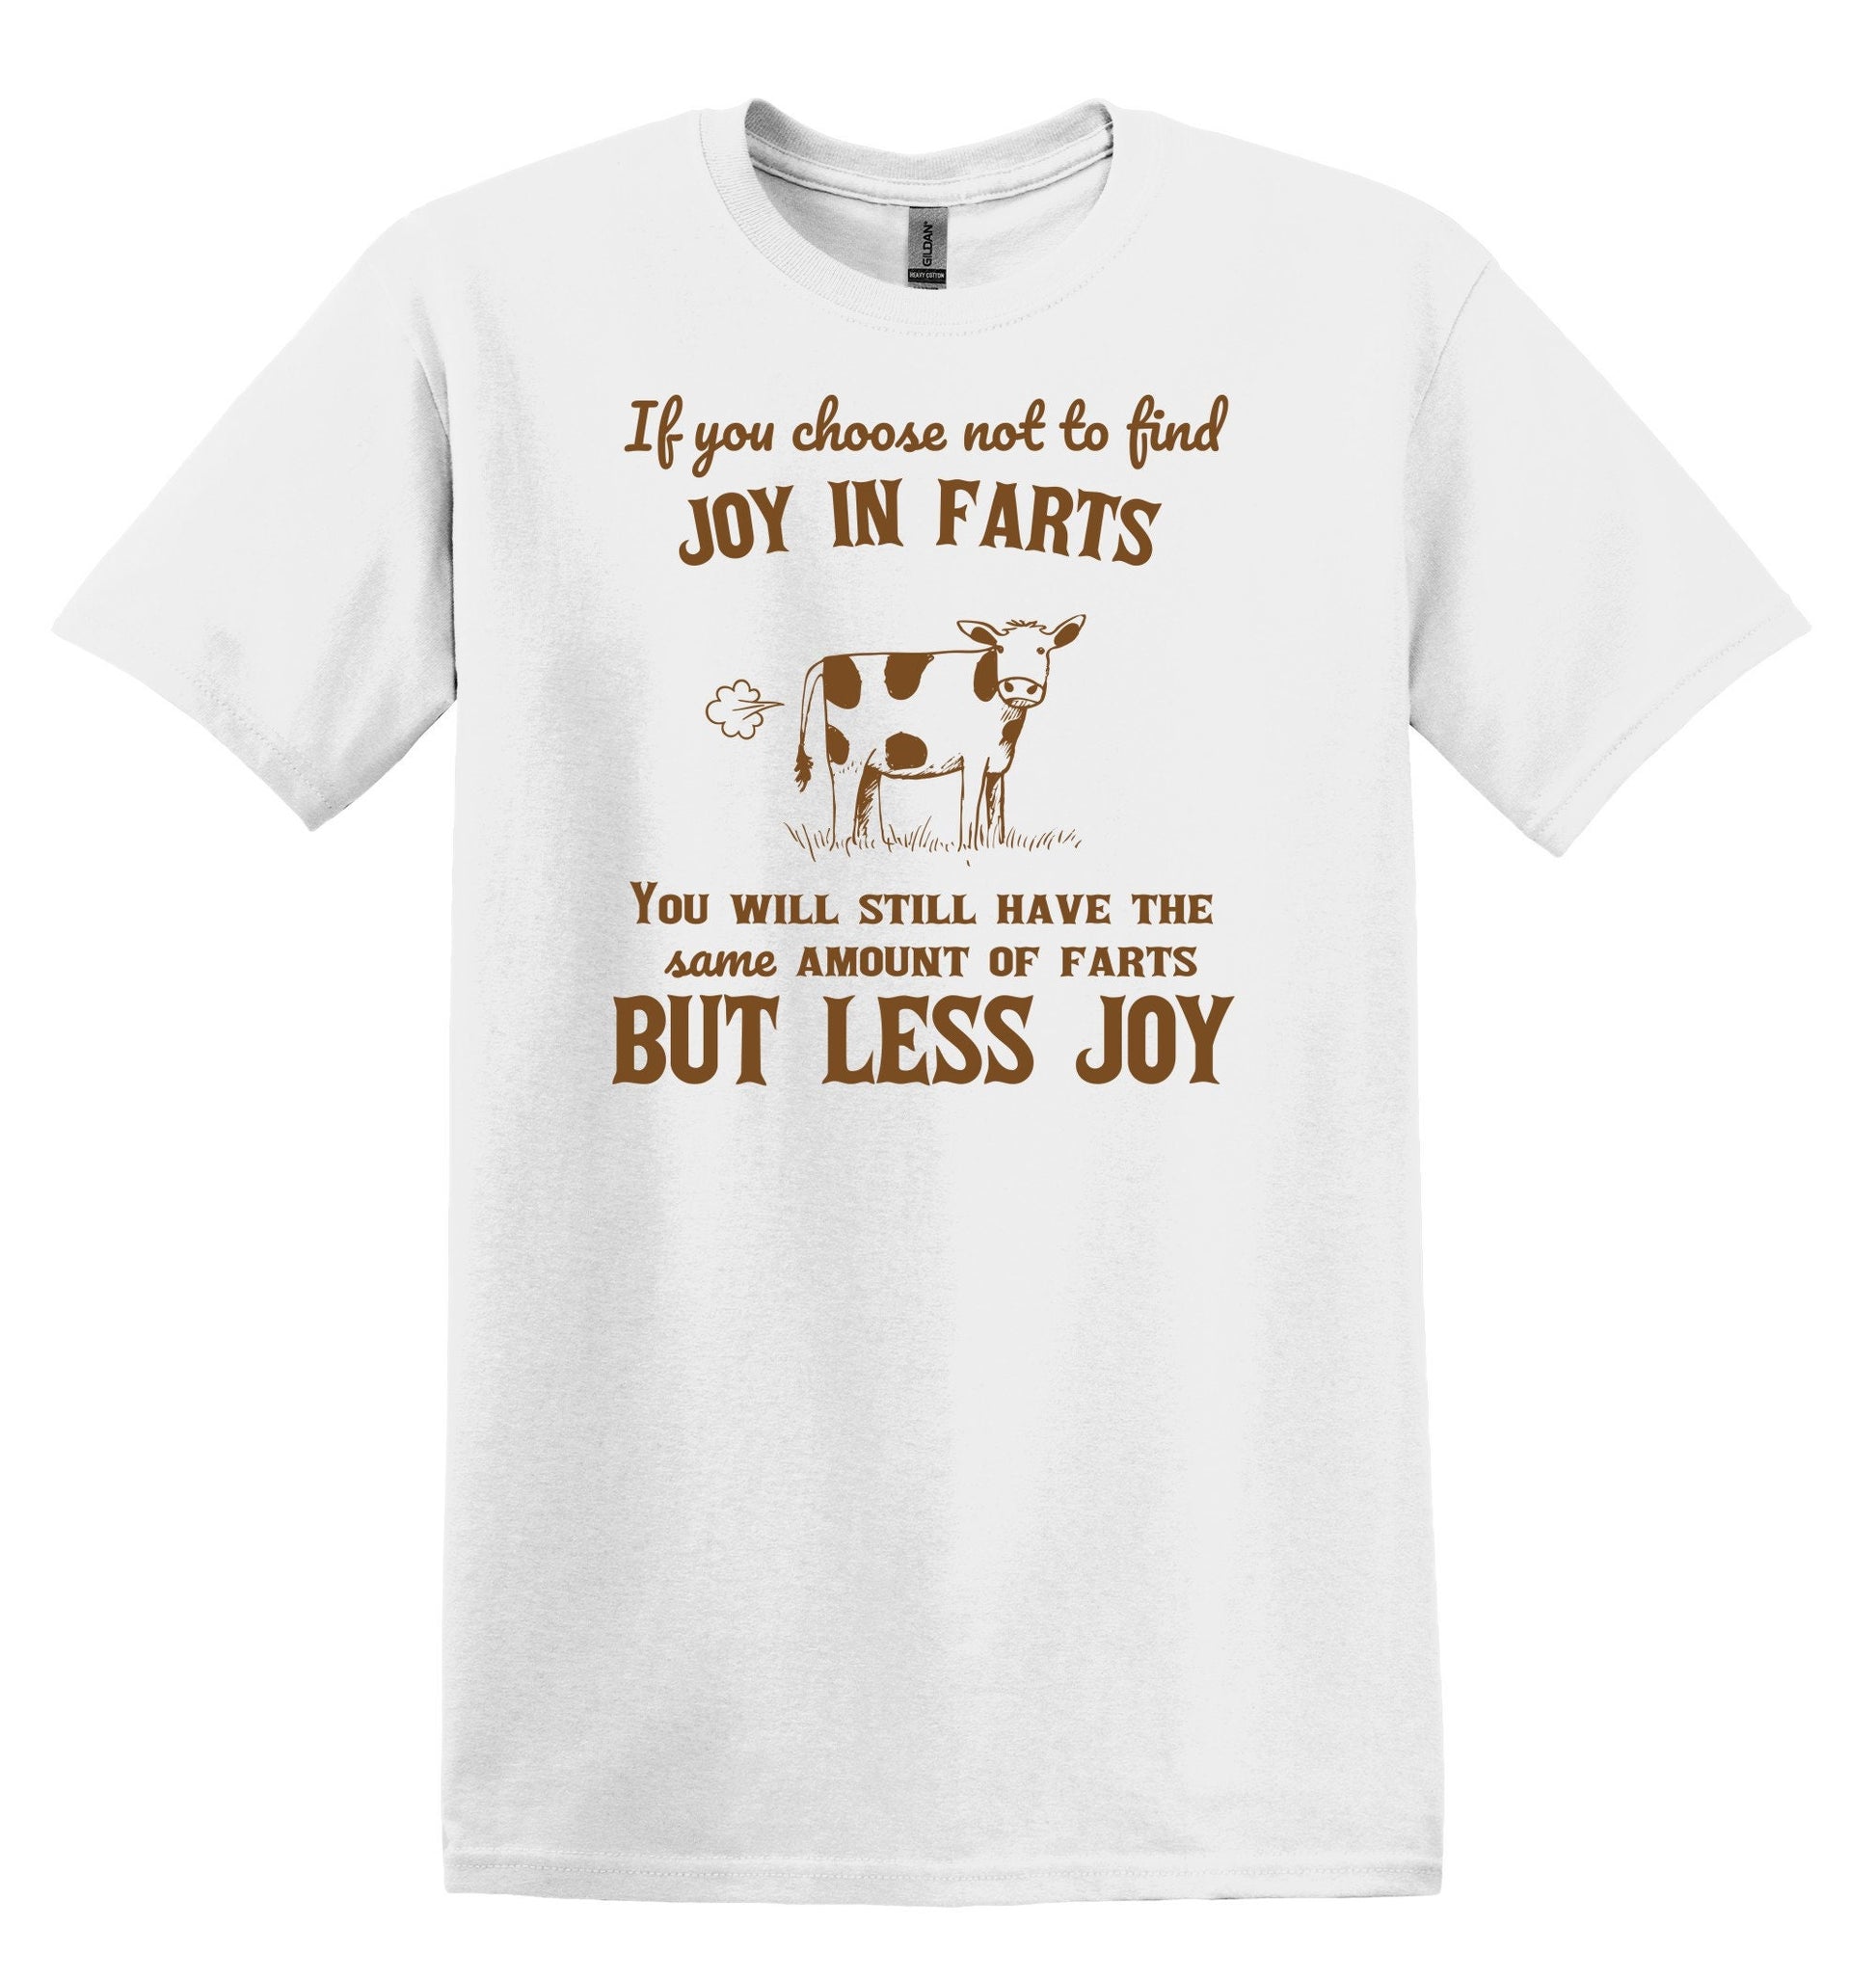 Joy in Farts Cow Shirt Graphic Shirt Funny Shirt Vintage Funny TShirt Nostalgia T-Shirt Relaxed Cotton Shirt Minimalist Shirt Gag Shirt